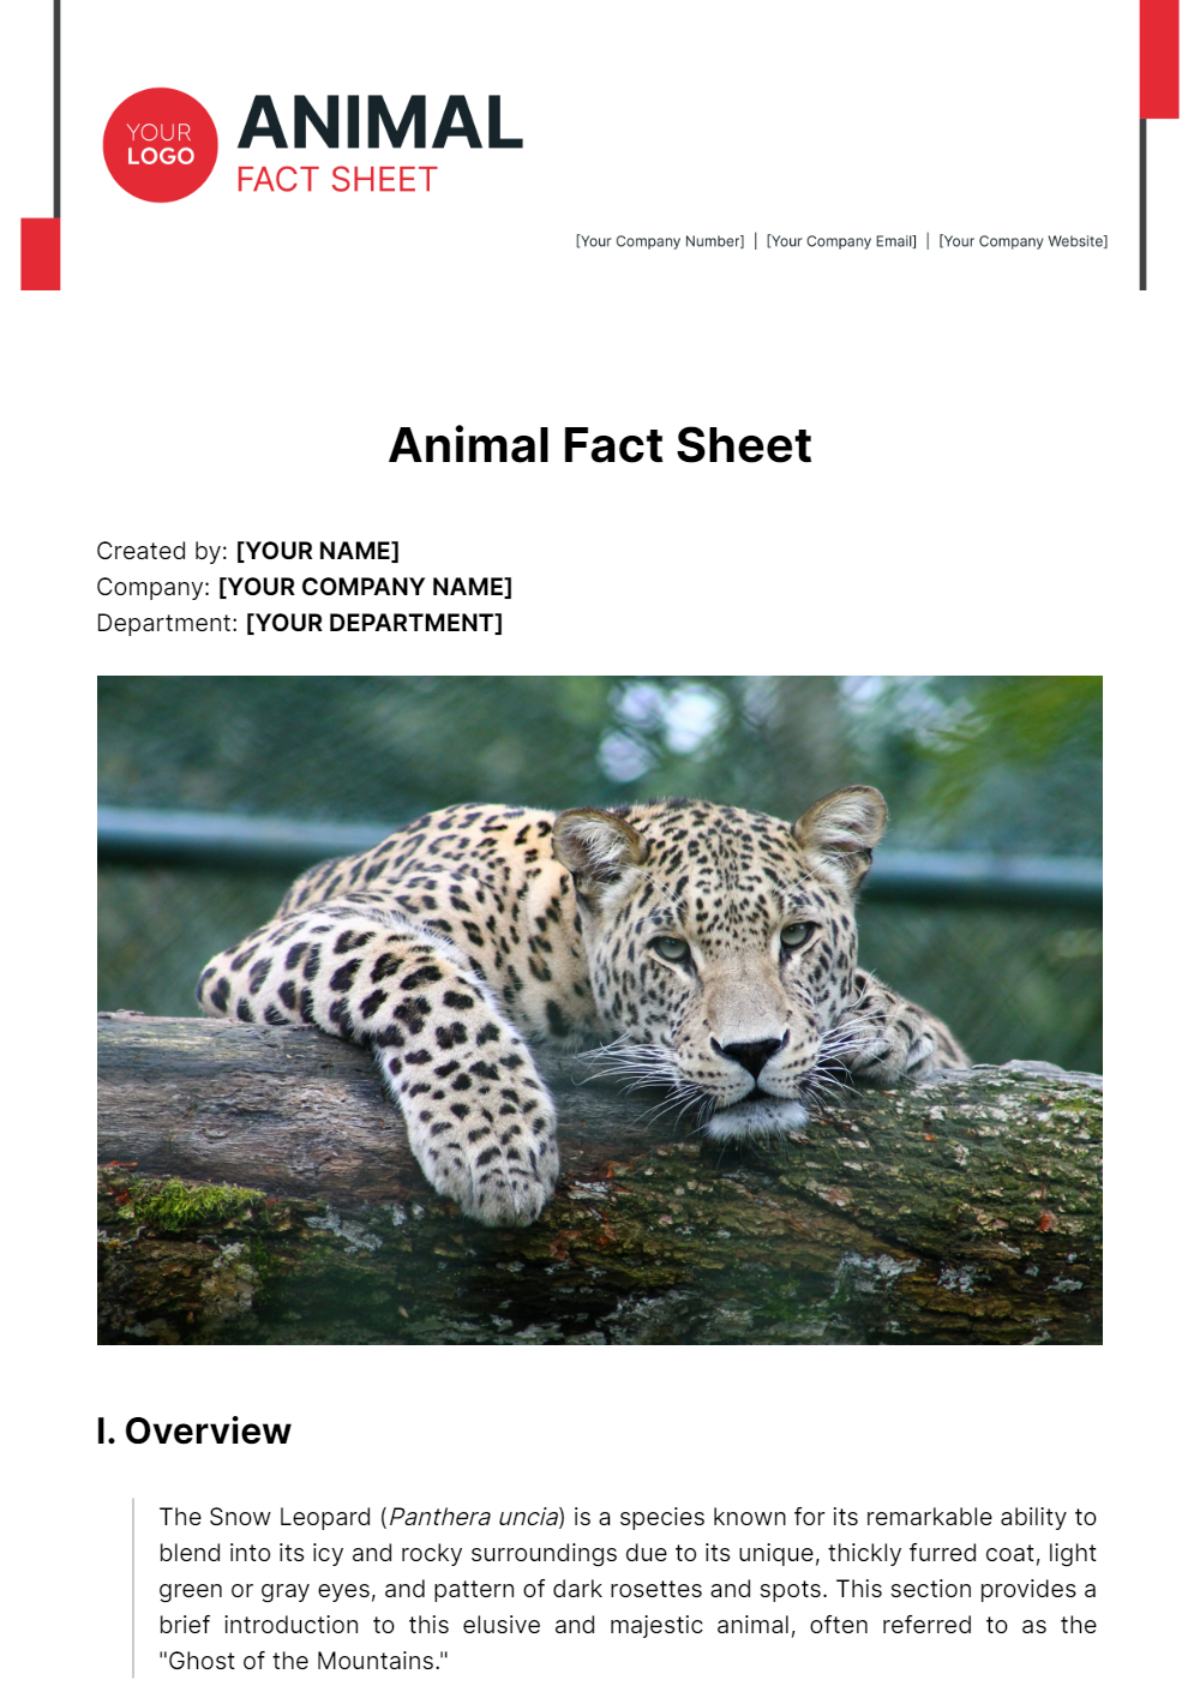 Animal Fact Sheet Template